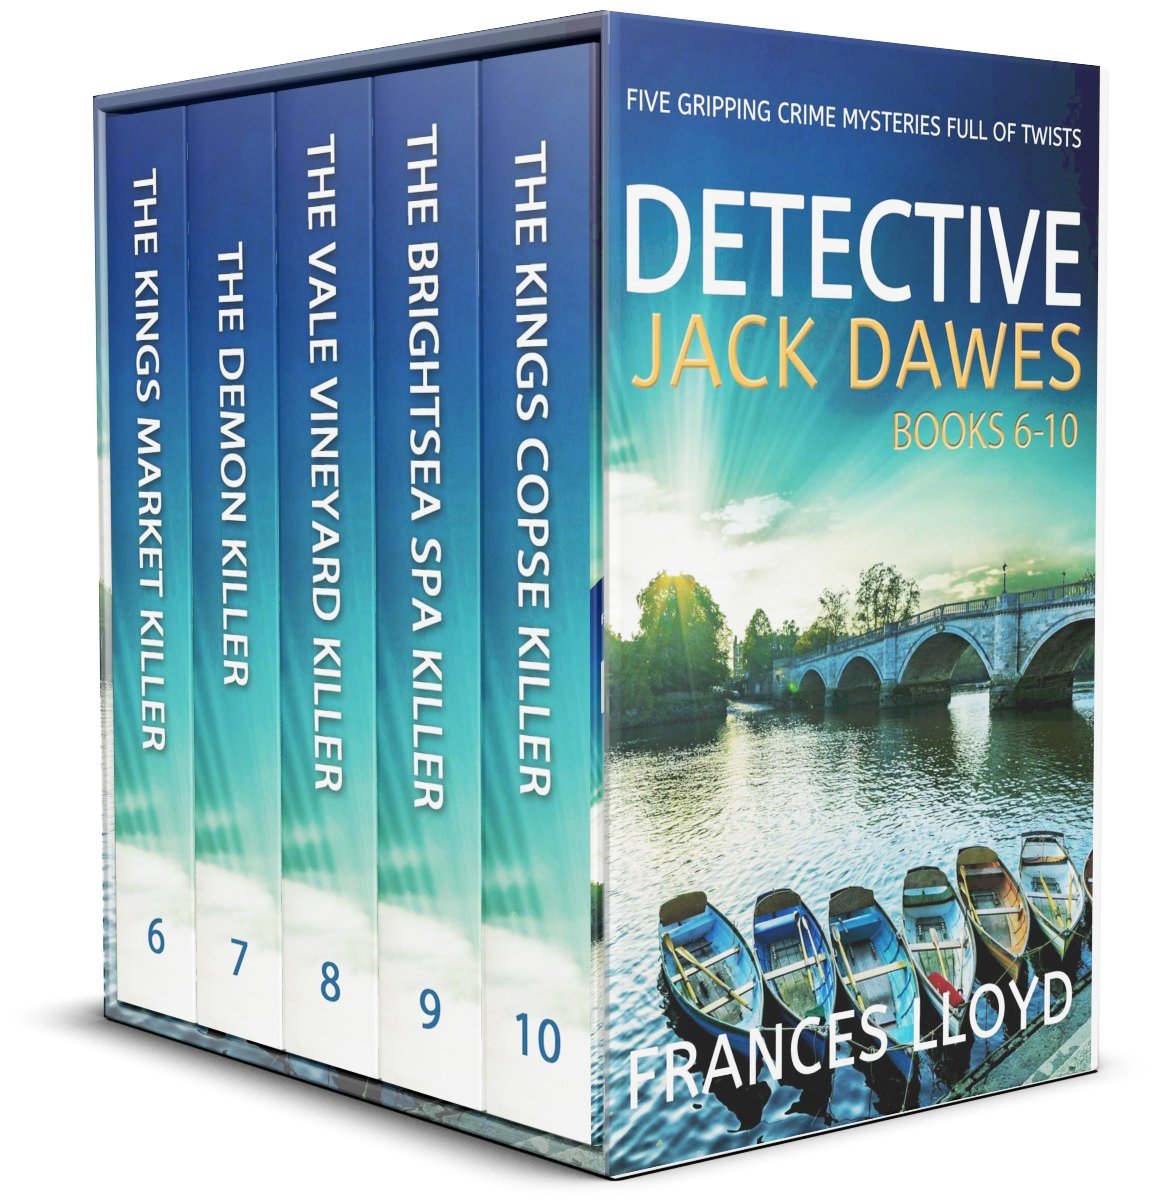 DETECTIVE JACK DAWES BOX SET 6-10 Cover publish.jpg